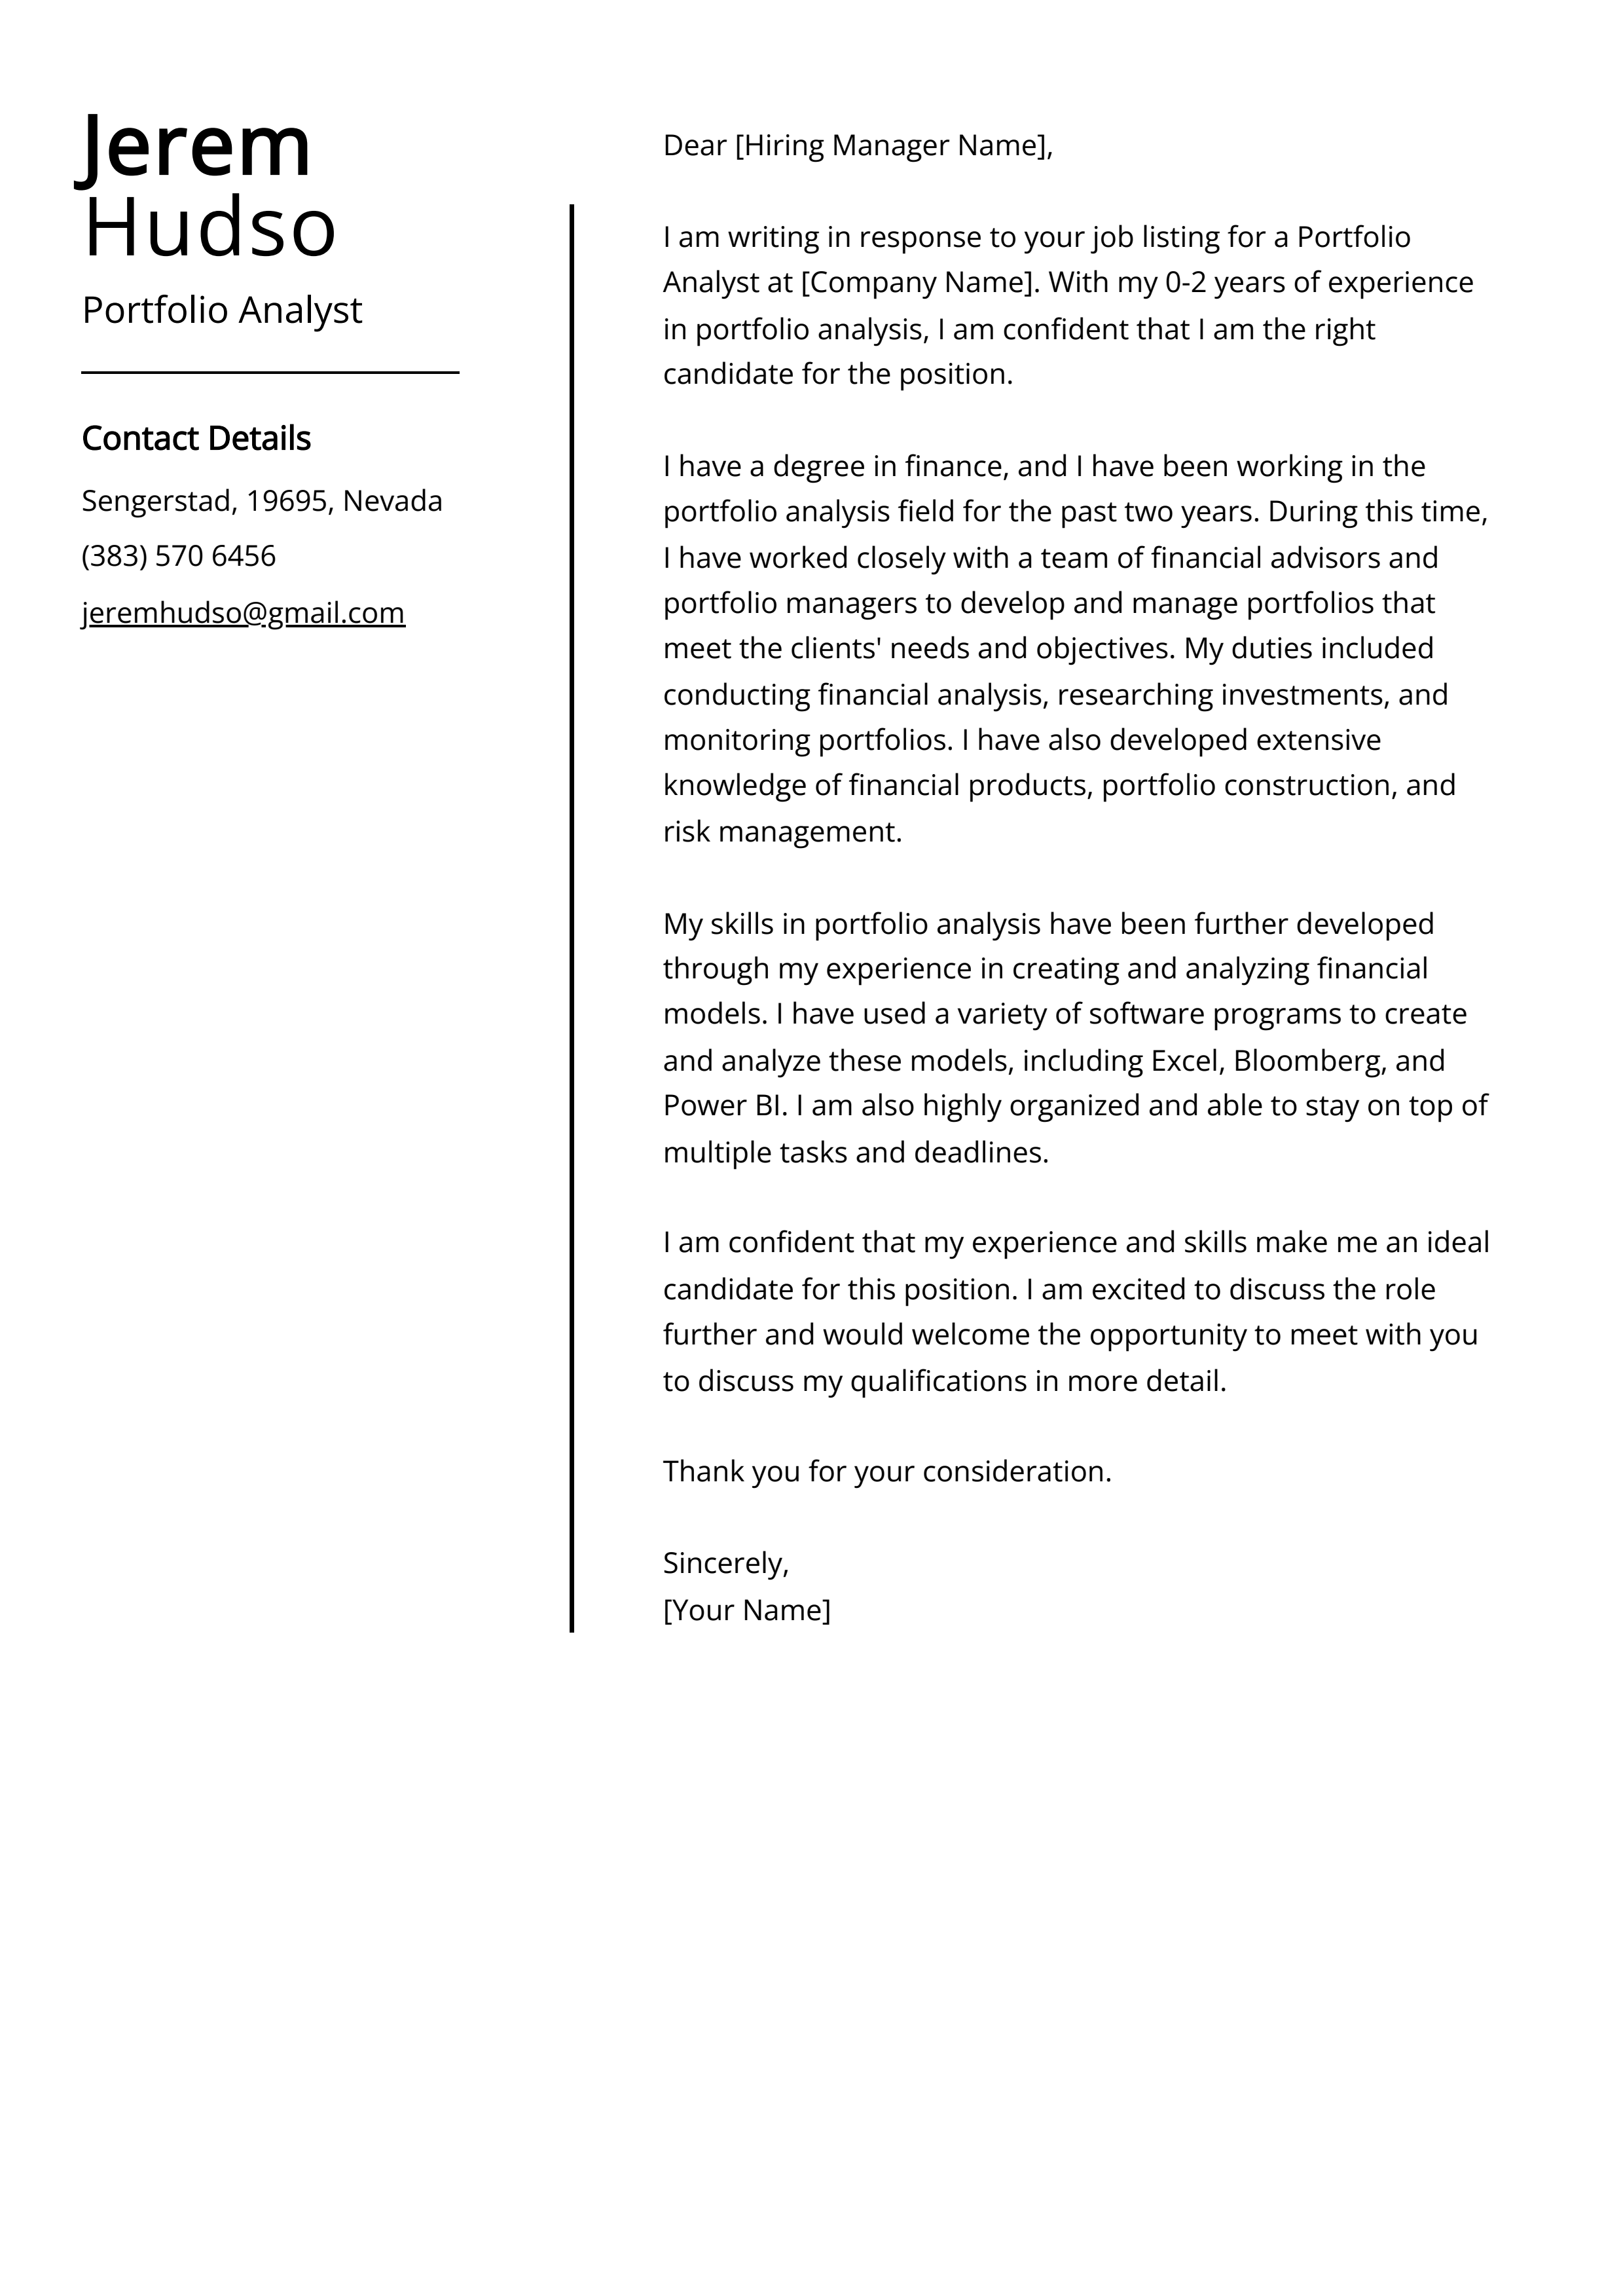 Portfolio Analyst Cover Letter Example